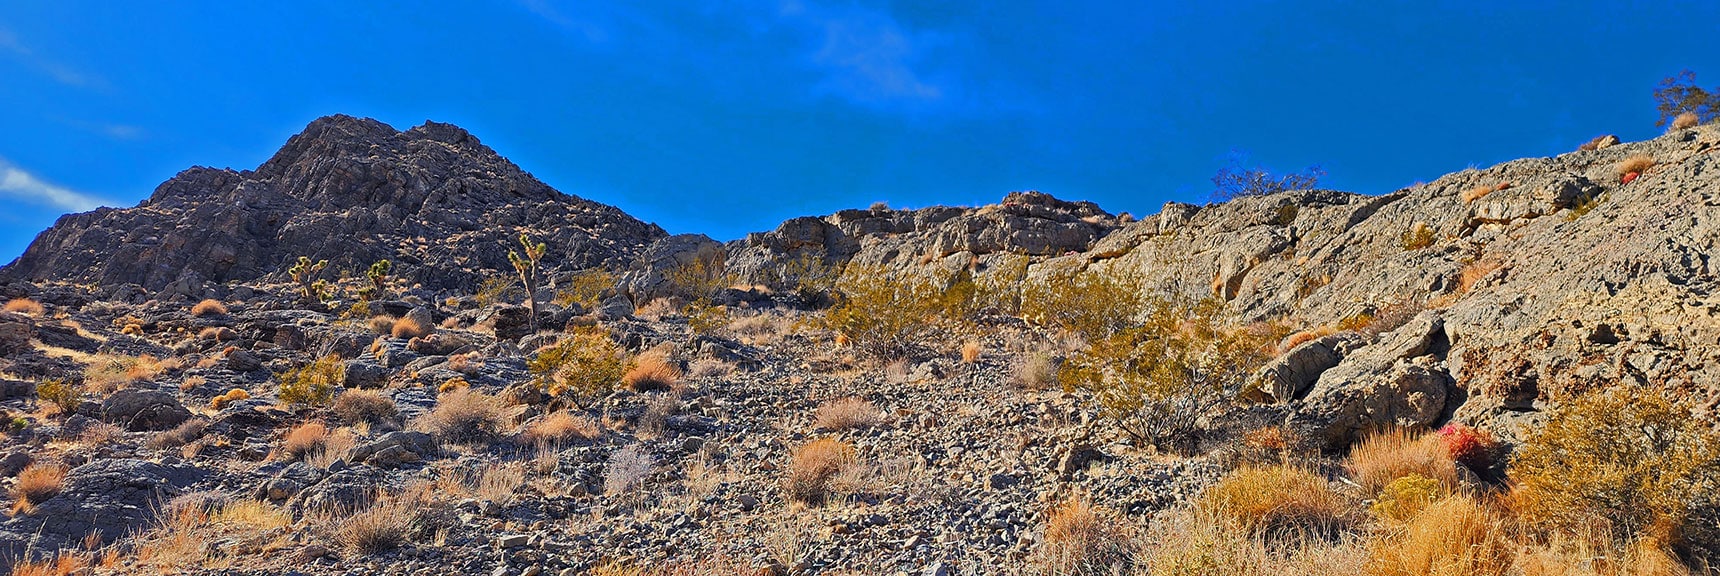 Approaching High Summit of Fossil Ridge East | Fossil Ridge Far East | Desert National Wildlife Refuge, Nevada